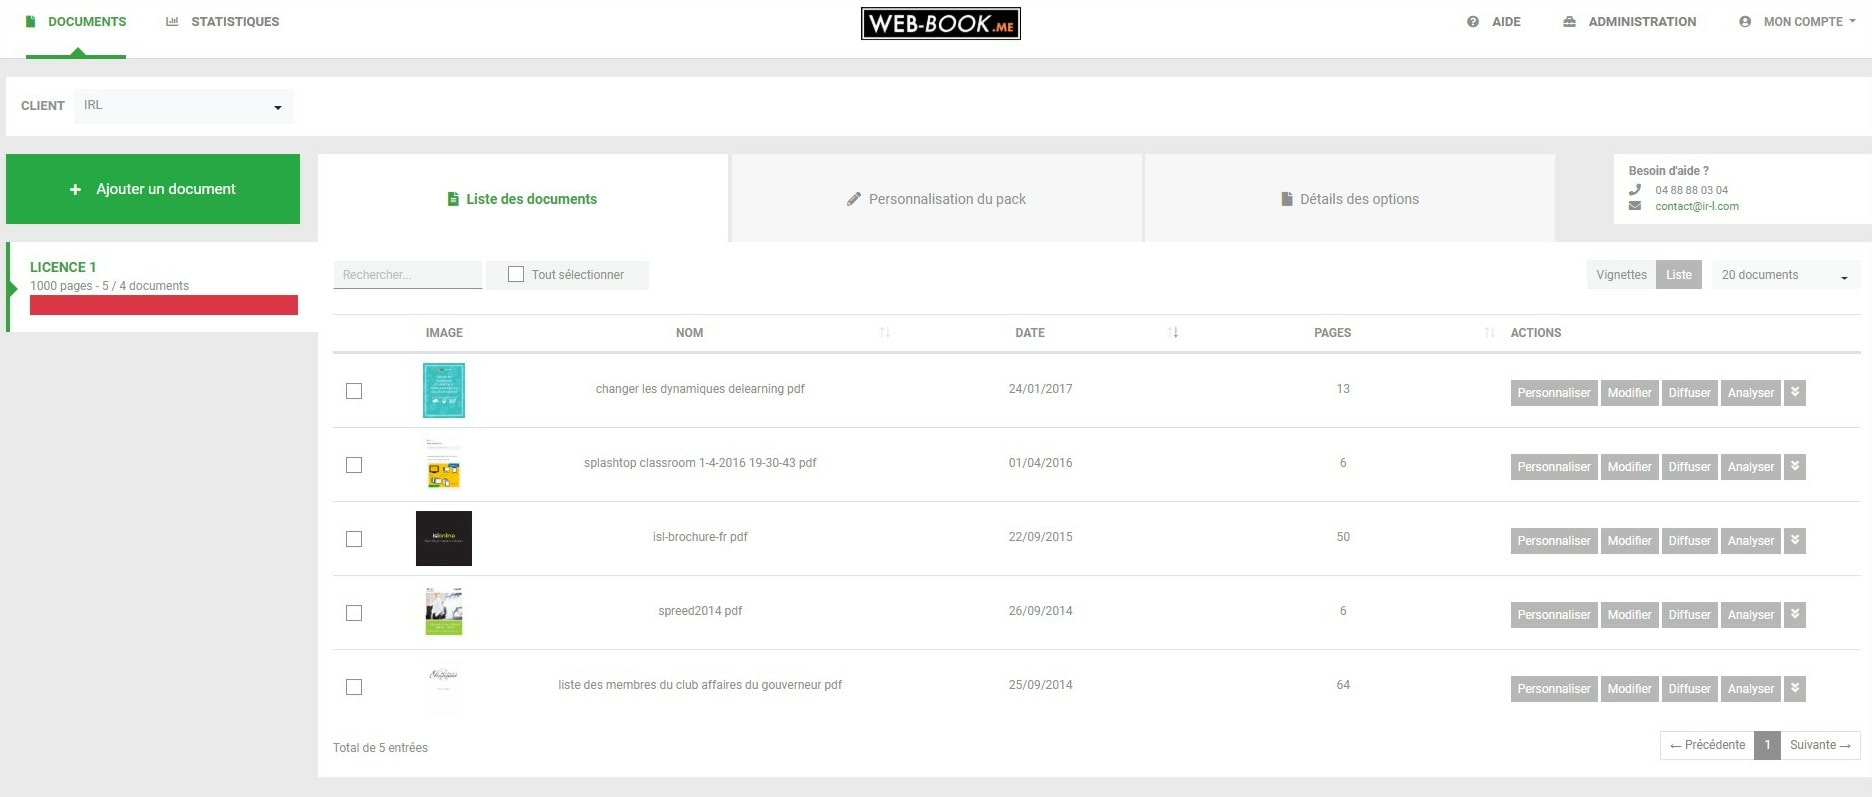 Nouvelle interface administrateur WEB-BOOK